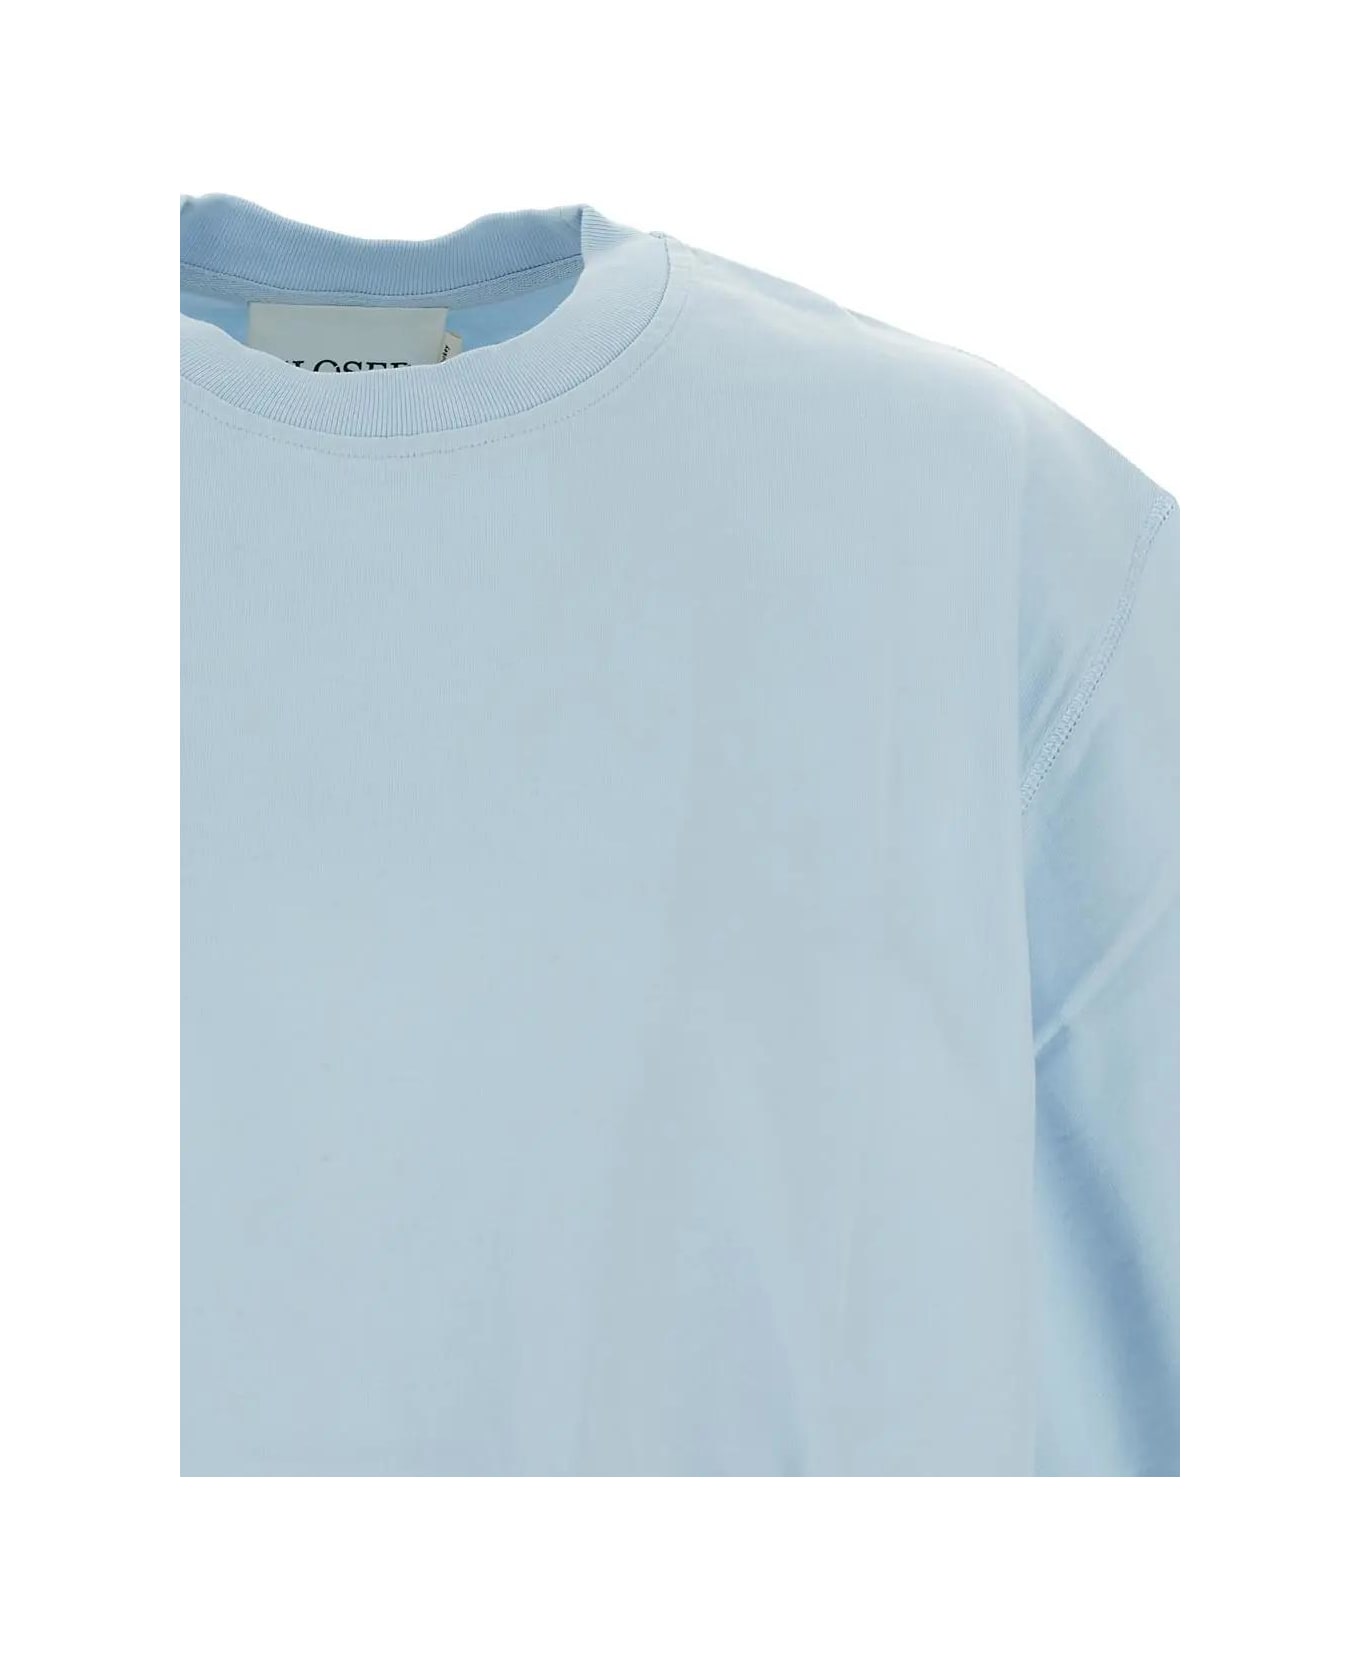 Closed Cotton T-shirt - Blue